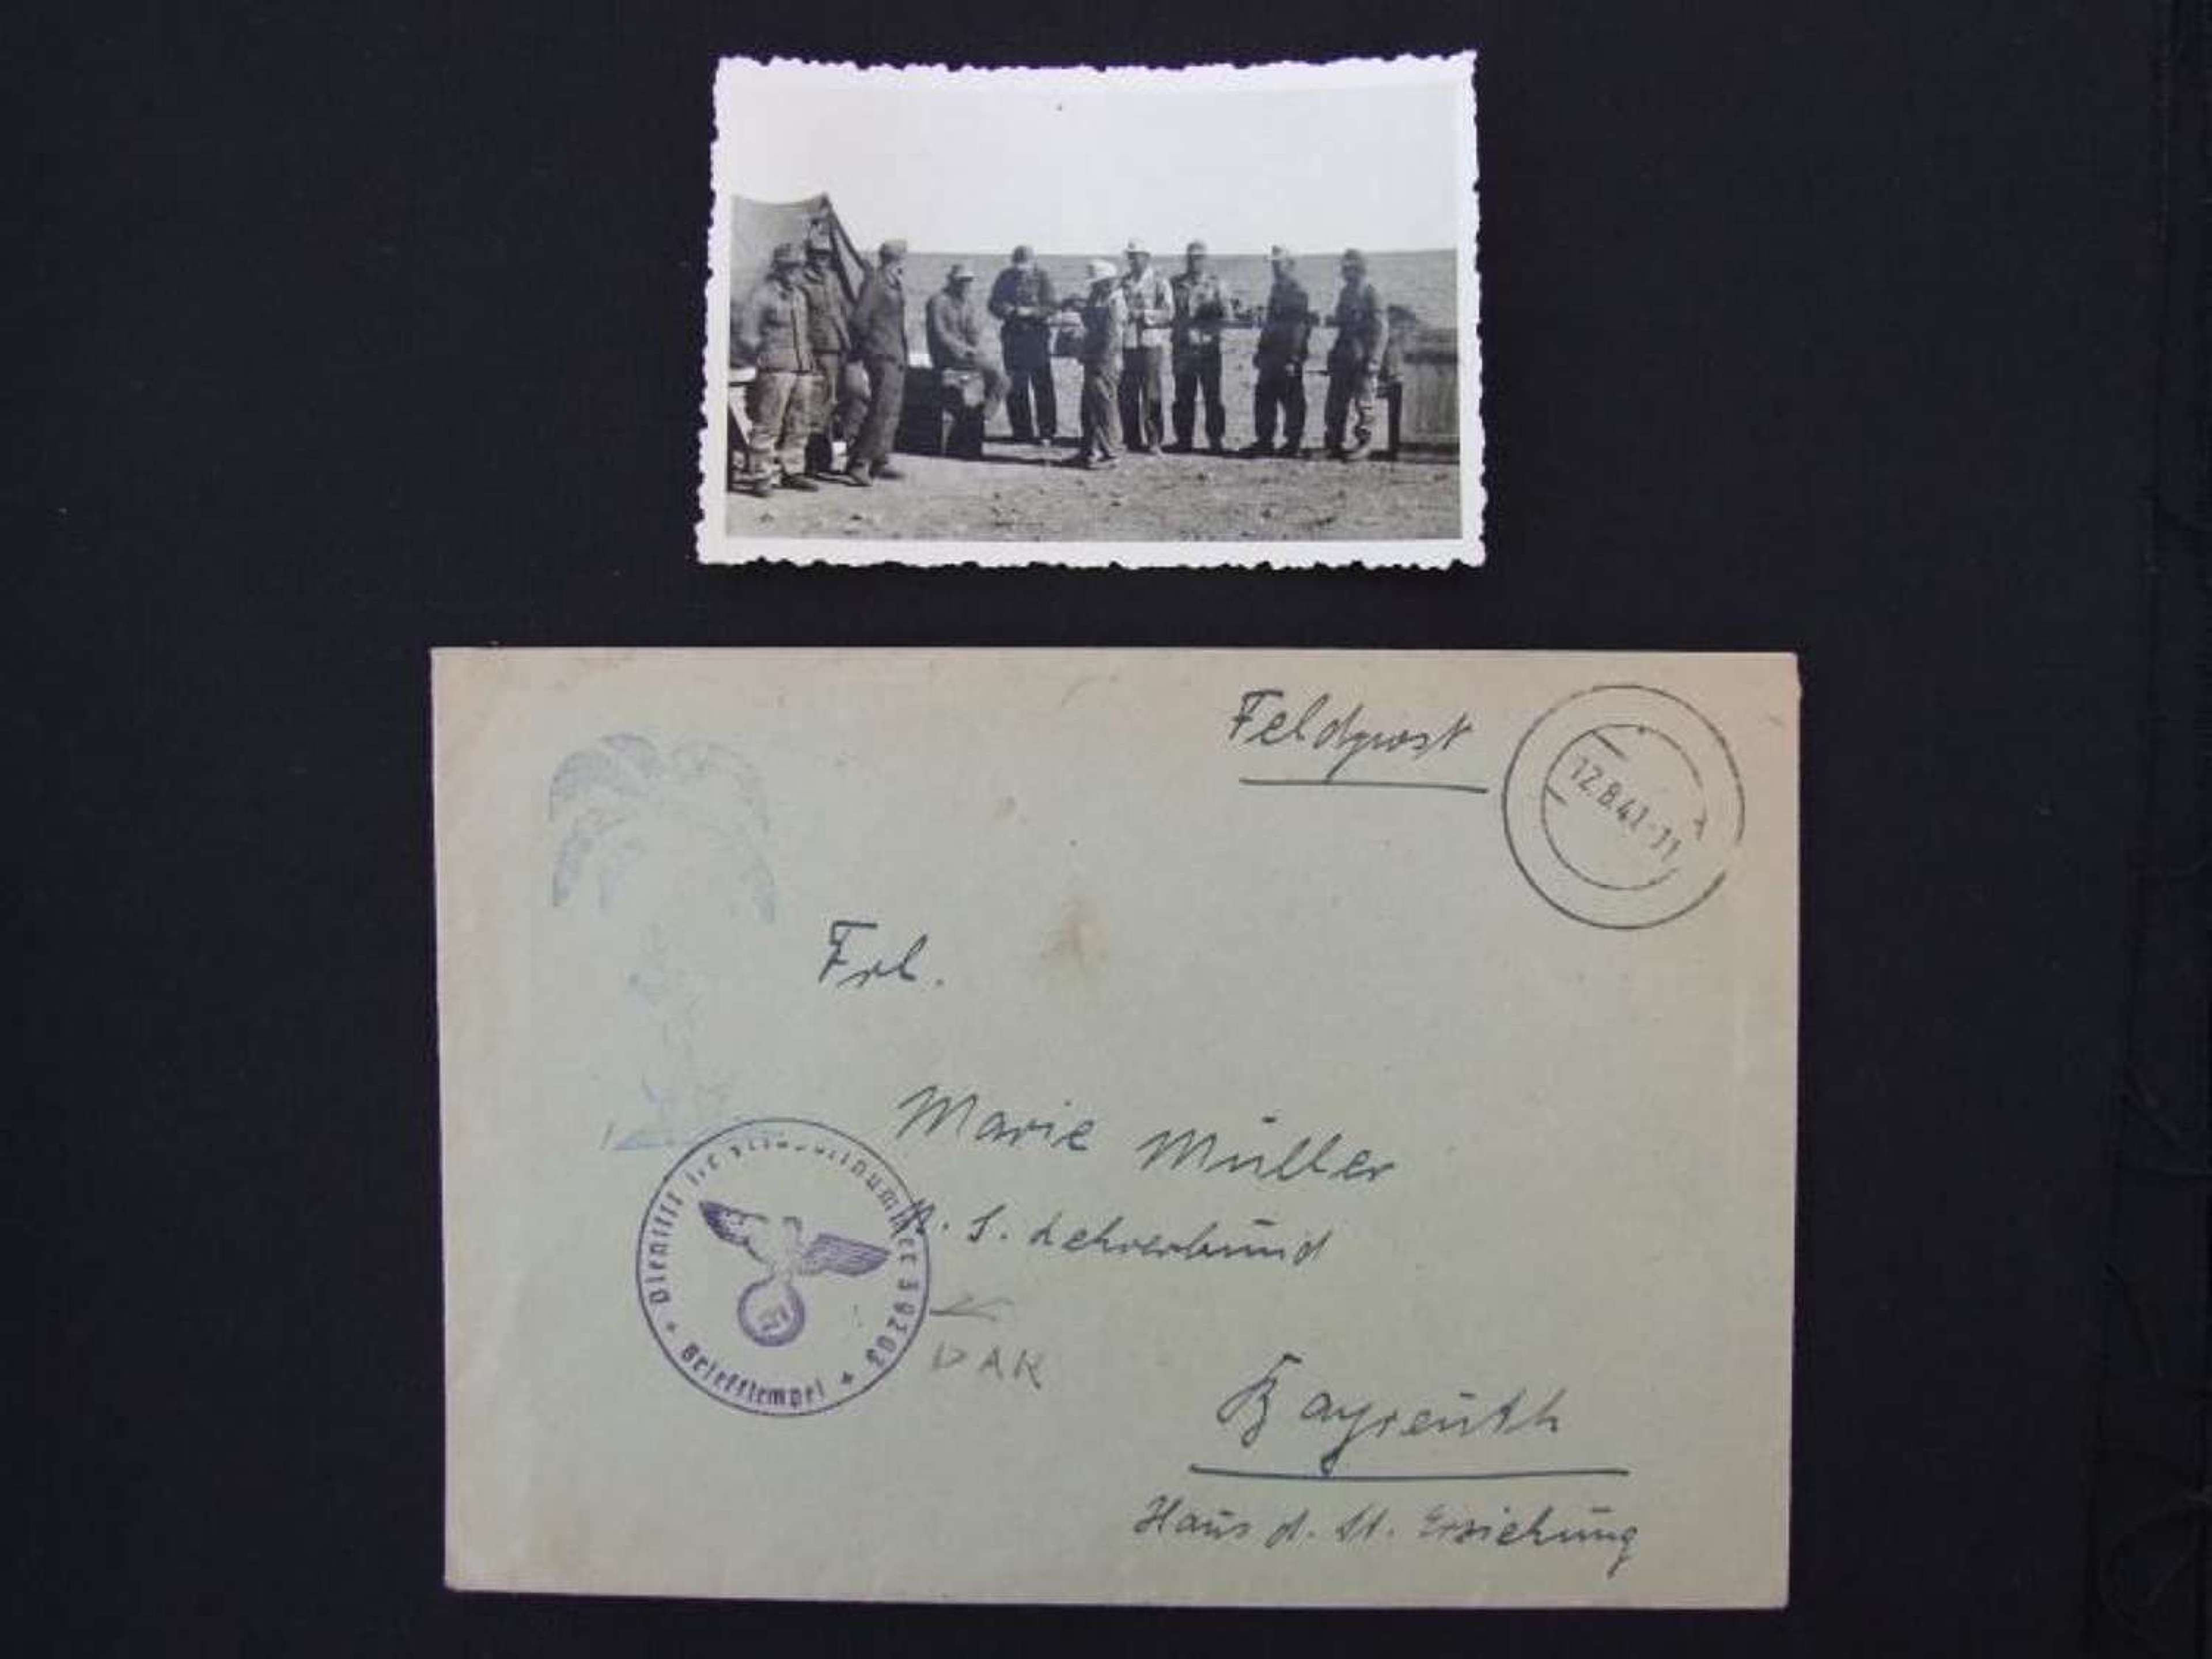 Afrika Korps Felpost Envelope with rare Palmstempel